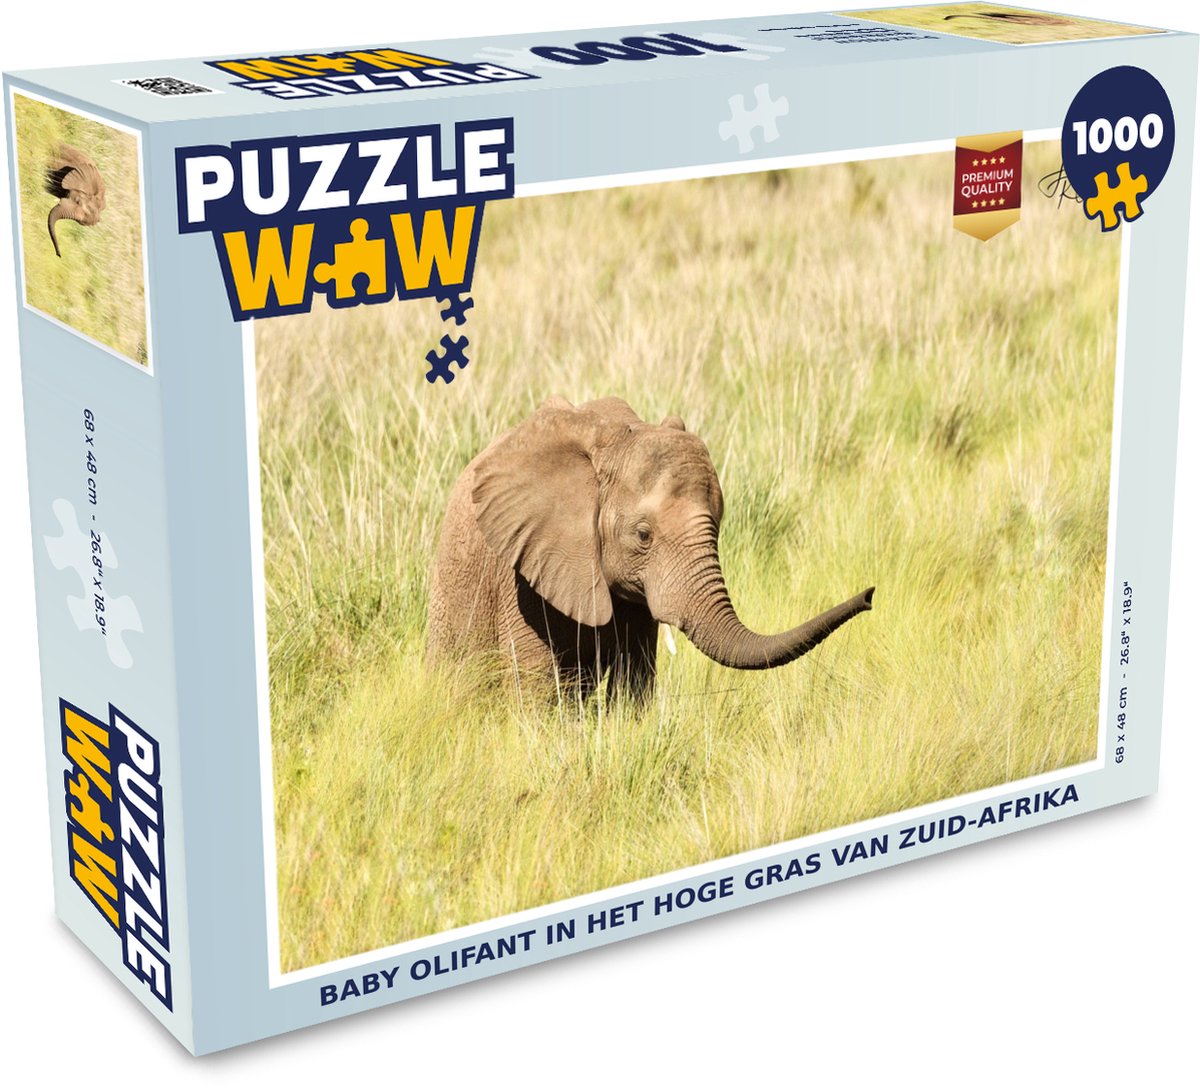 Puzzel Baby olifant in het hoge gras van Zuid-Afrika - Legpuzzel - Puzzel  1000 stukjes... | bol.com